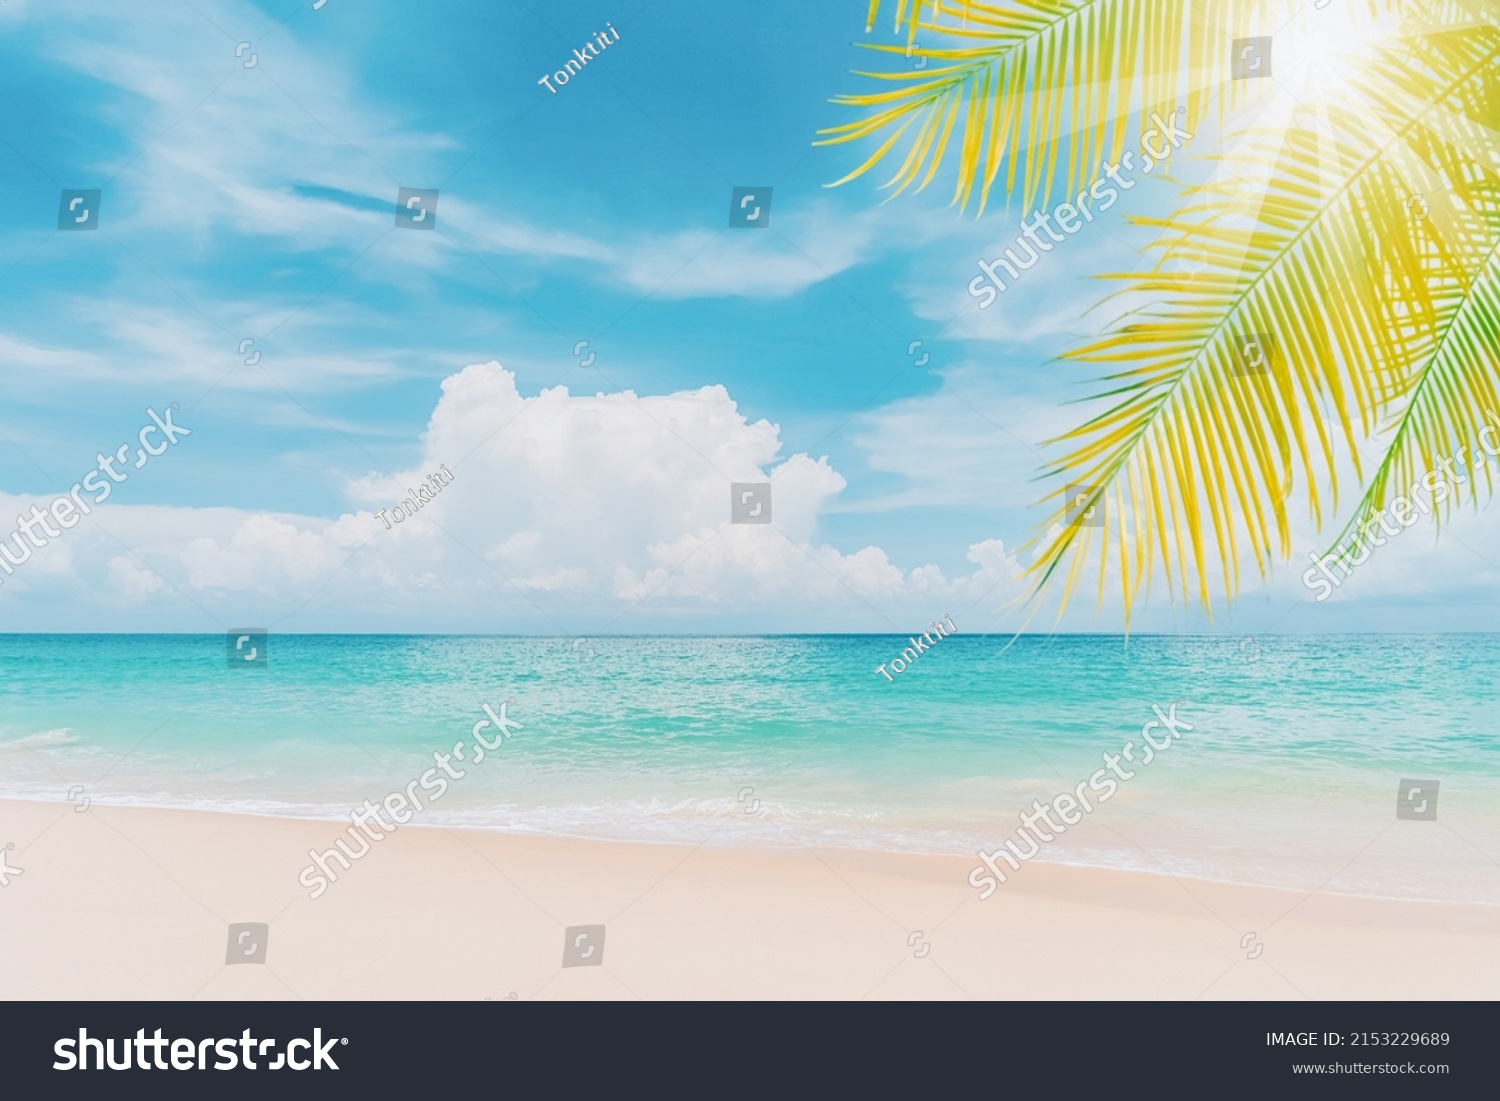 Palm Tree On Tropical Beach Blue Stock Photo Shutterstock